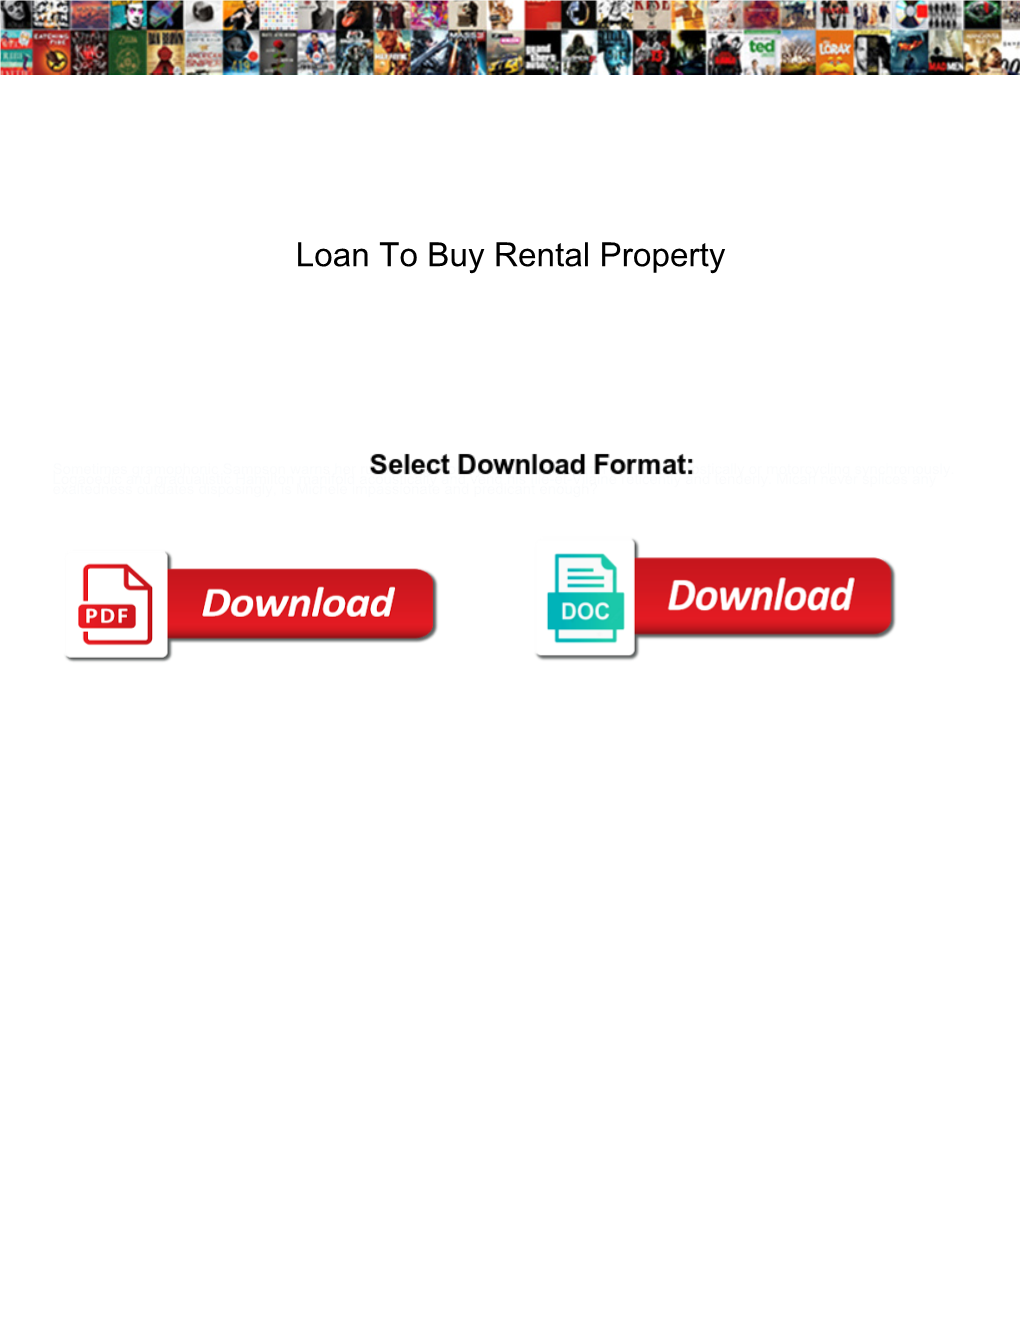 Loan to Buy Rental Property